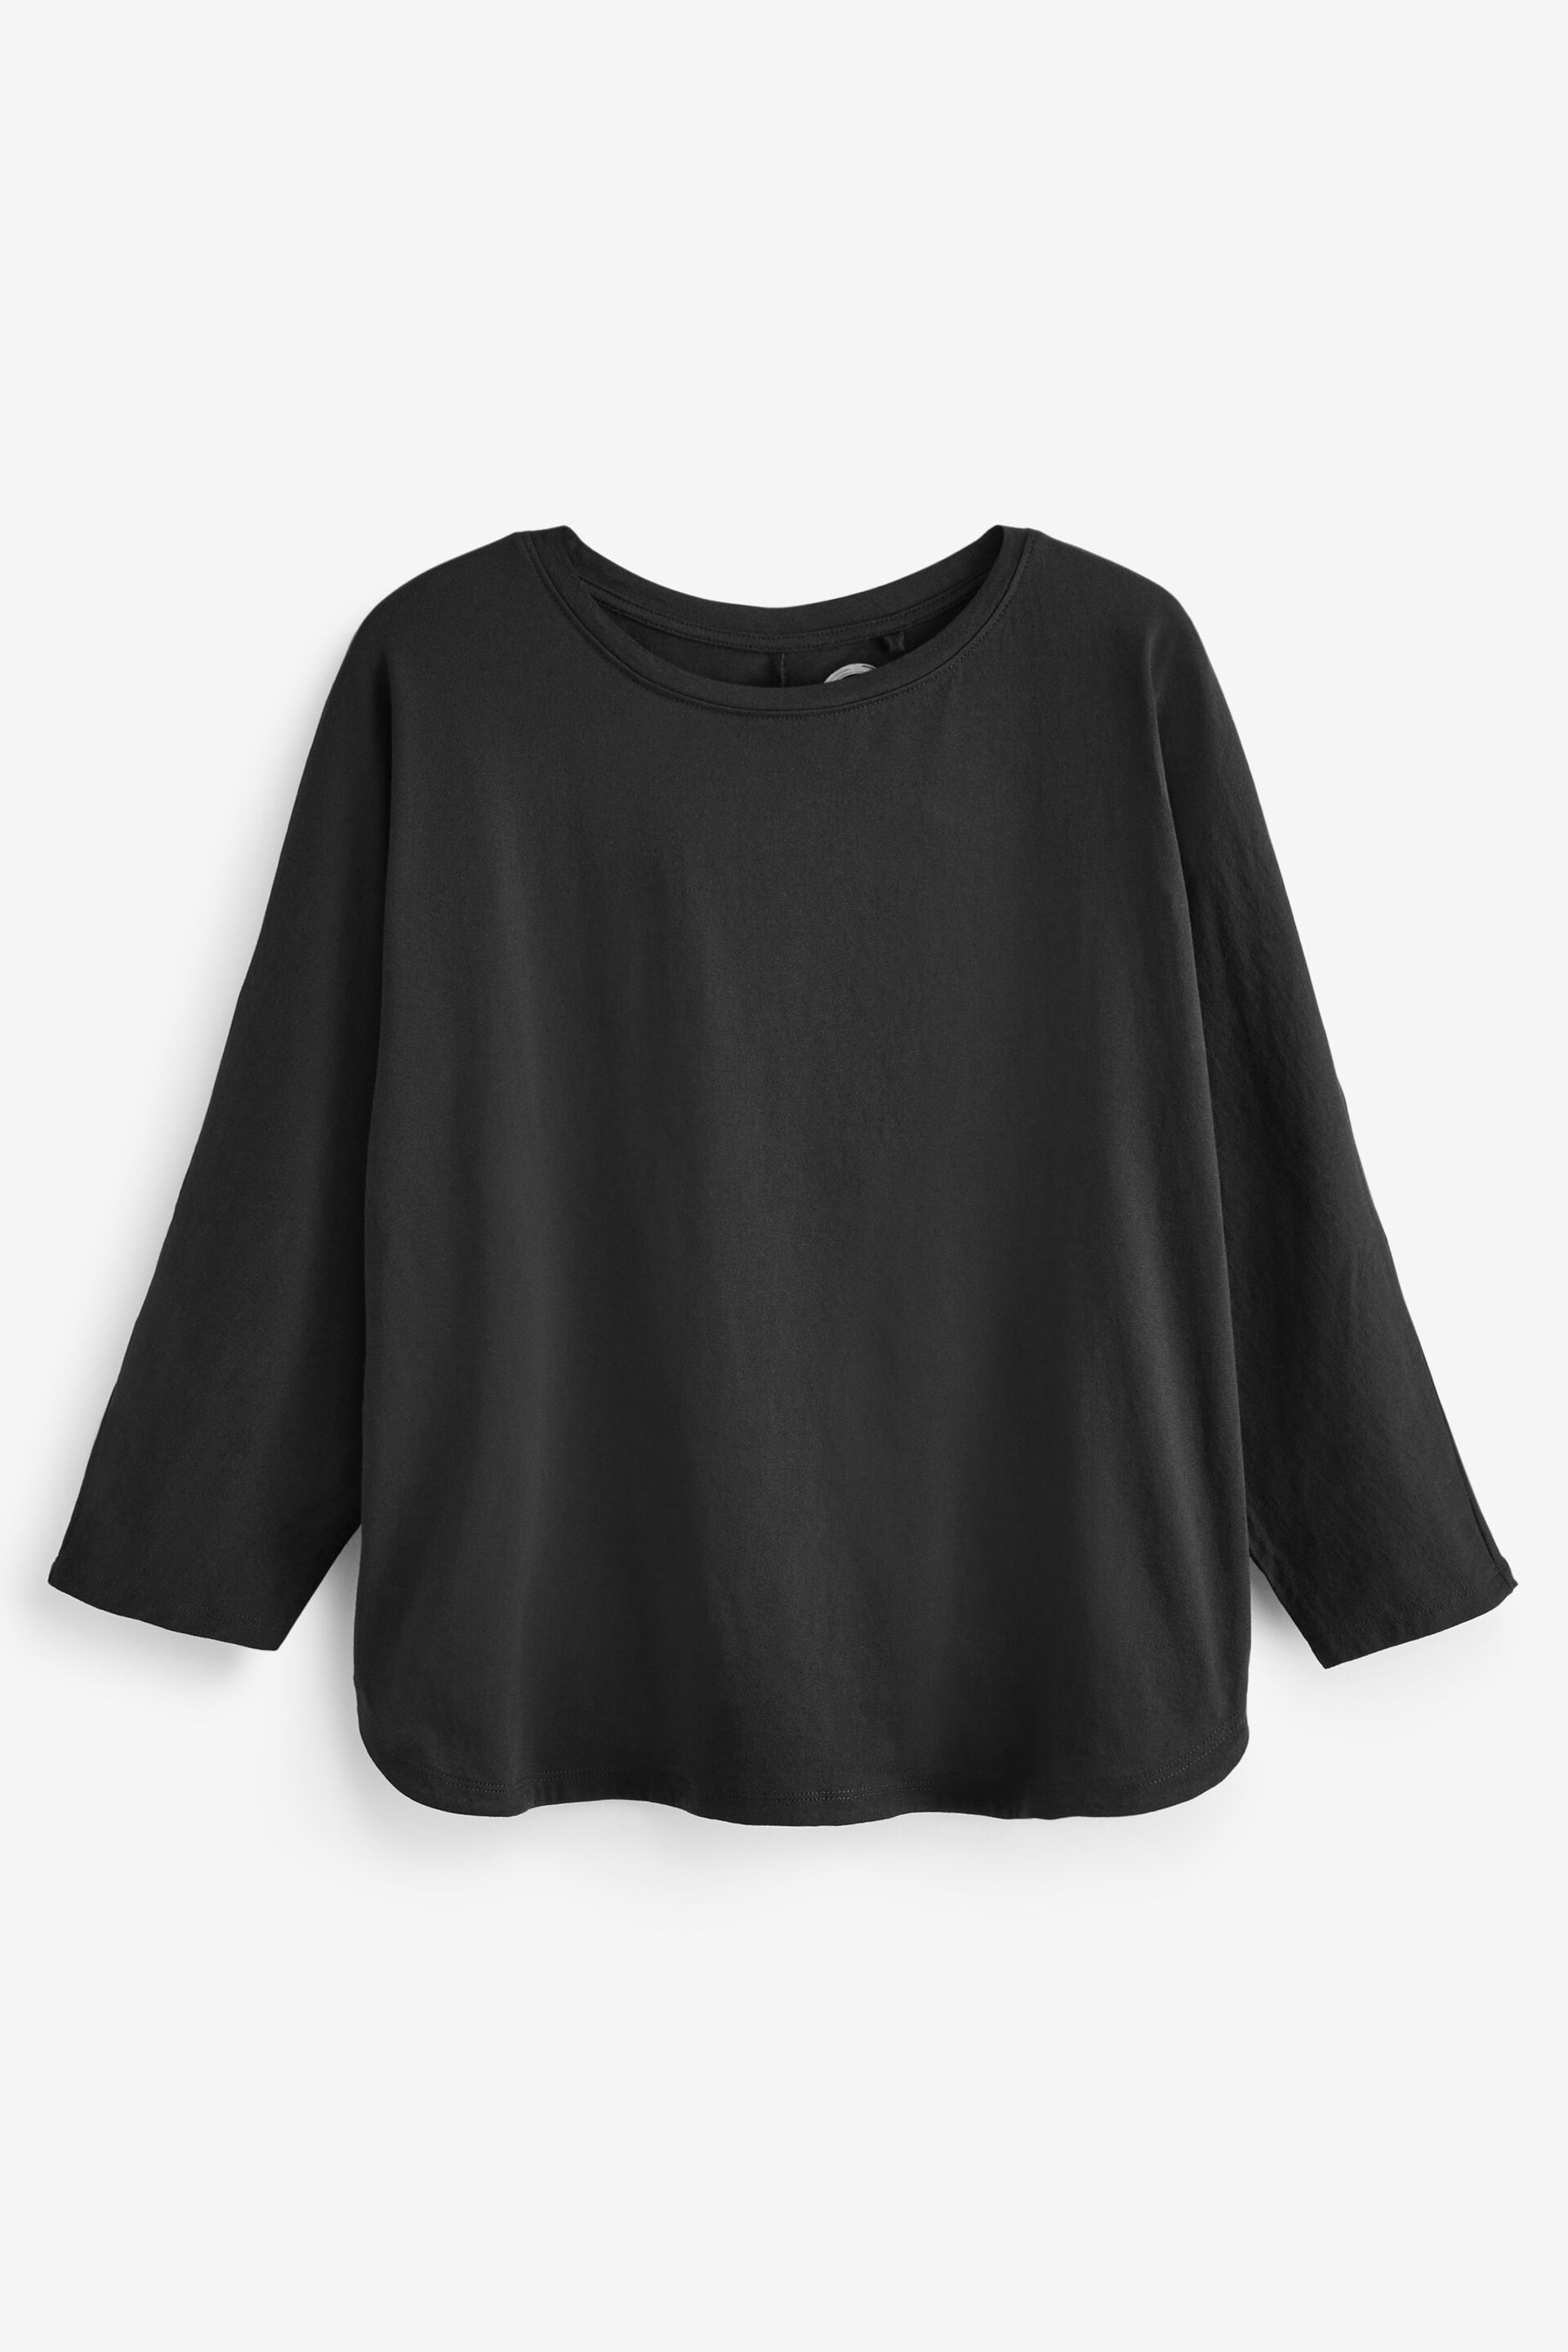 Black 3/4 Length Sleeve T-Shirt - Image 6 of 6